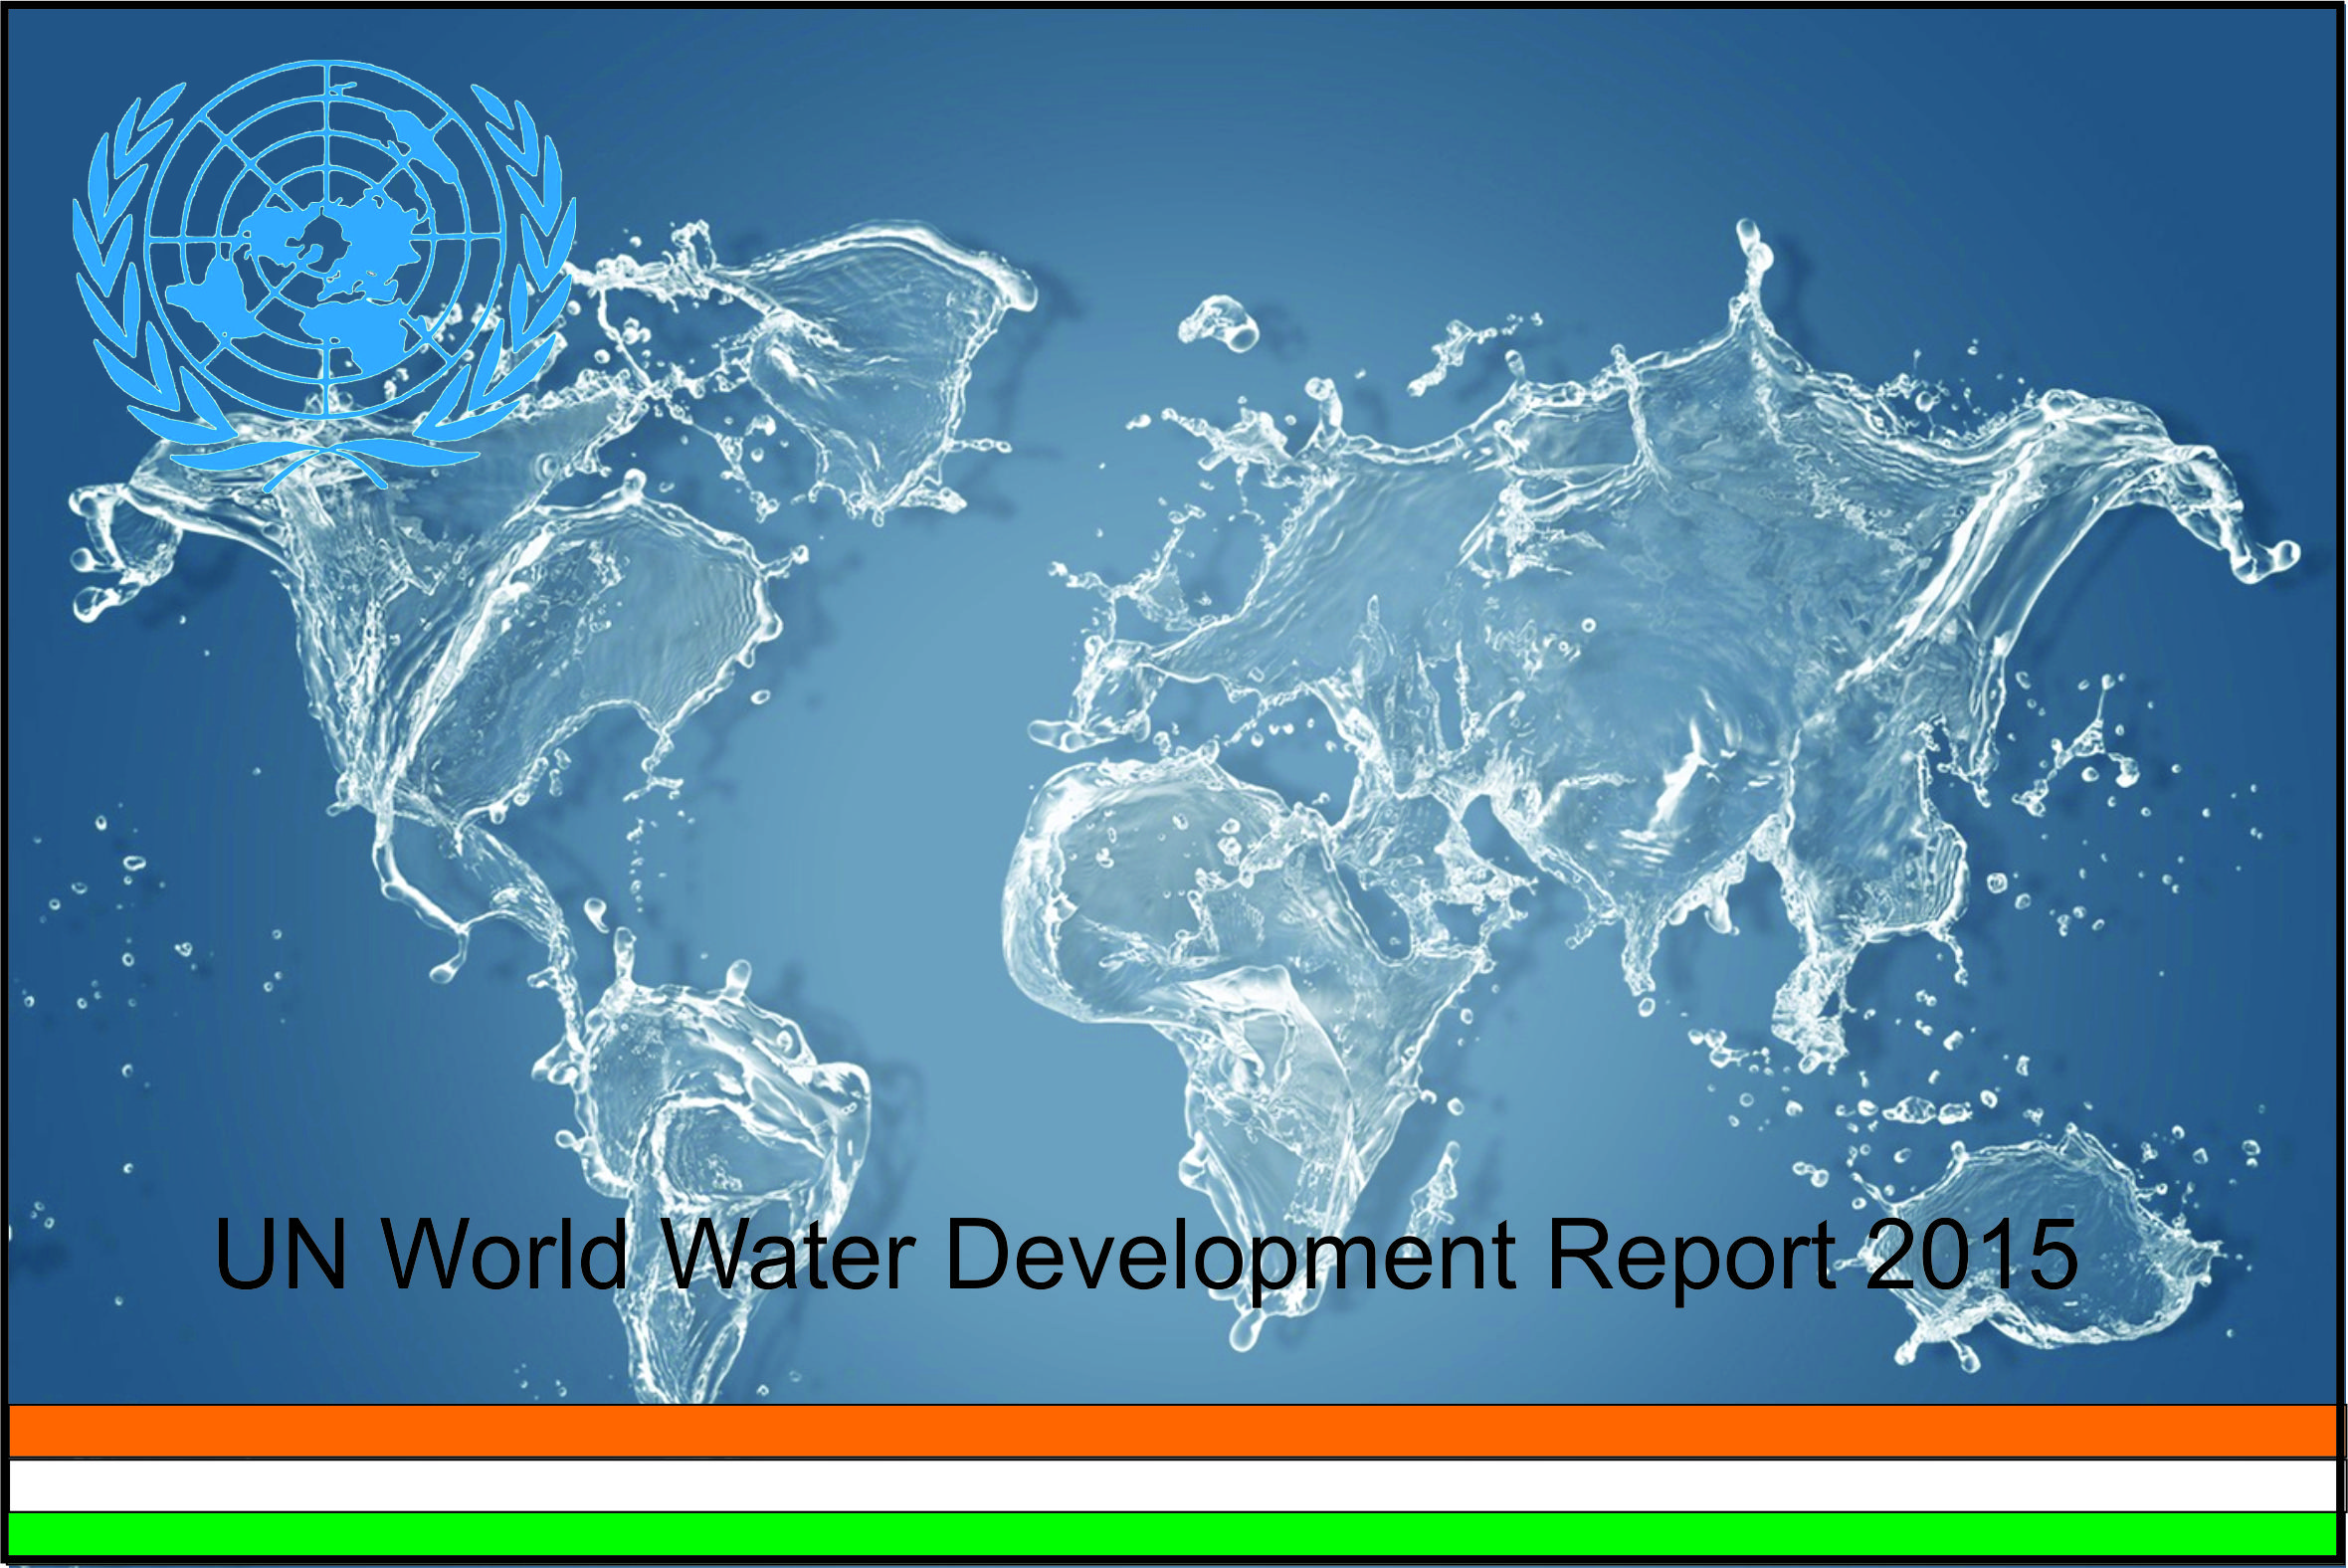 UN World Water Development Report Releases